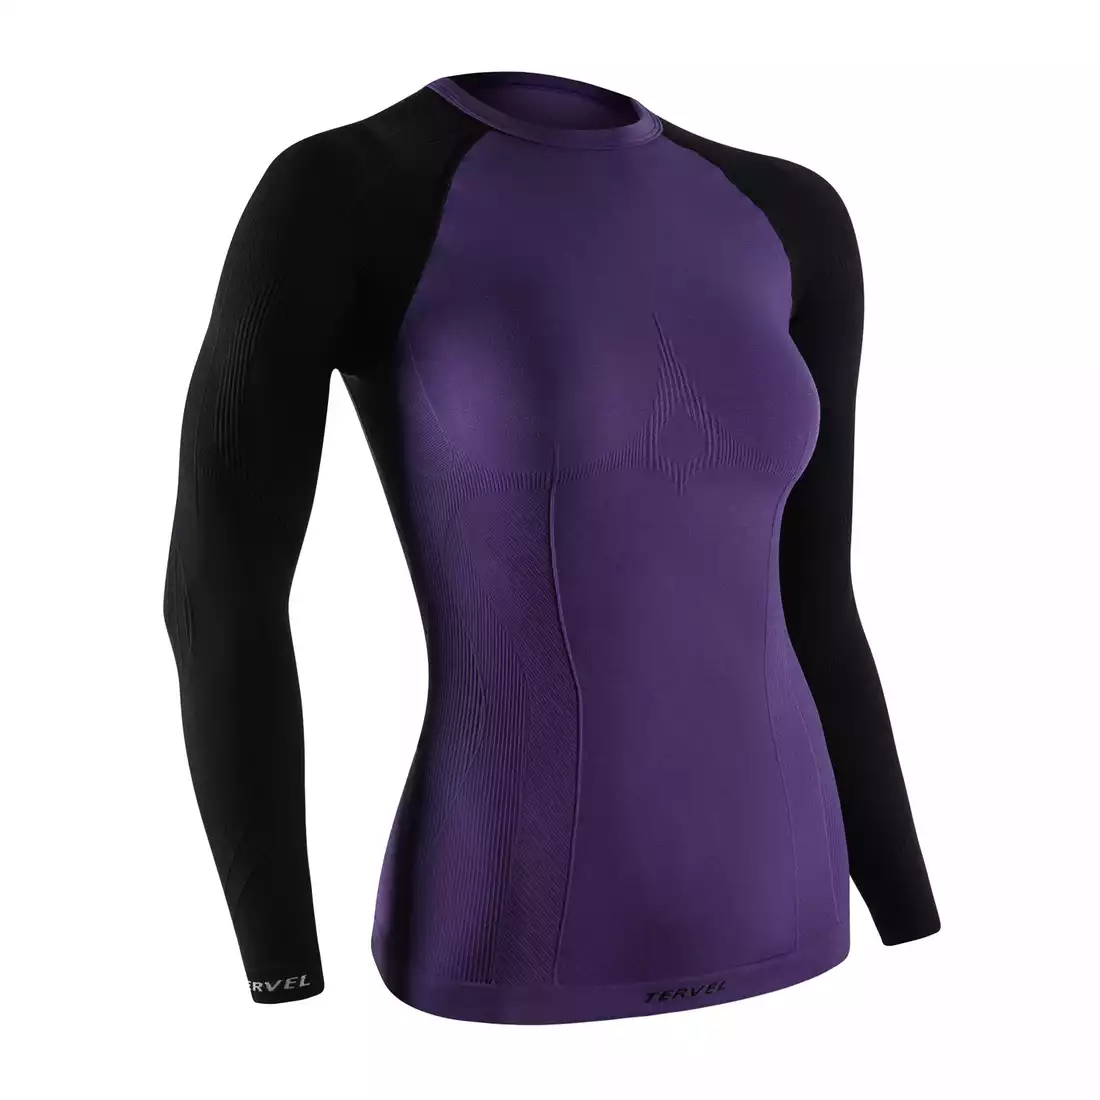 TERVEL COMFORTLINE 2002 - damska koszulka termoaktywna, długi rękaw, kolor: Fiolet (lila)-czarny